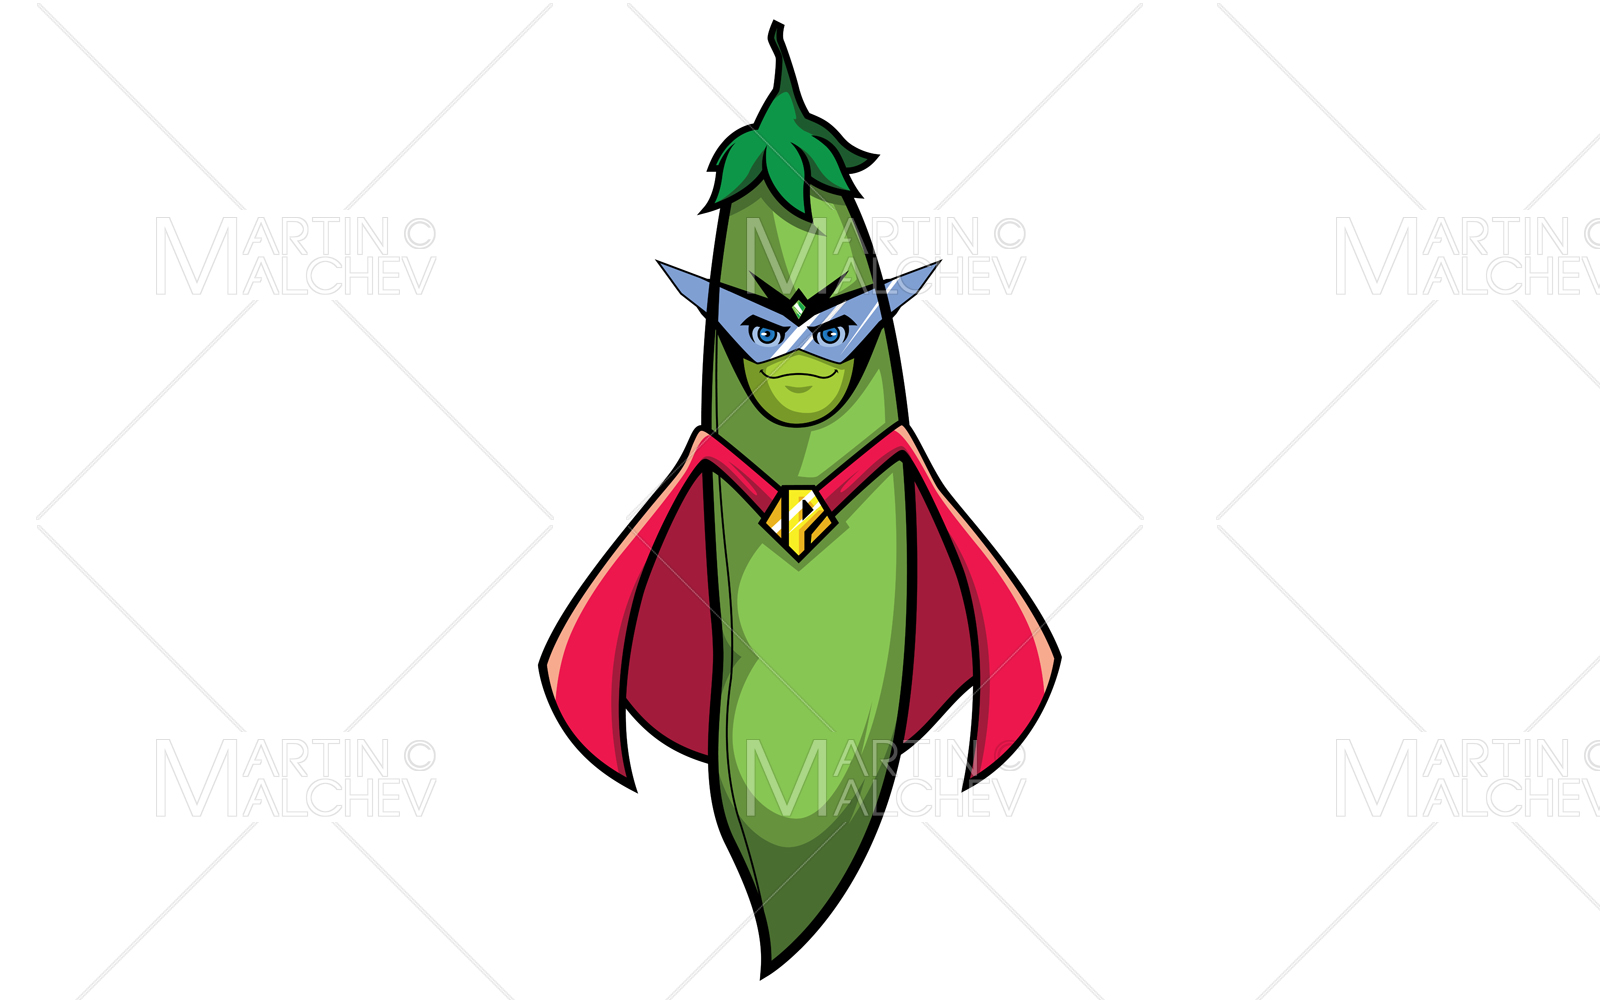 Peas Superhero Mascot Vector Illustration